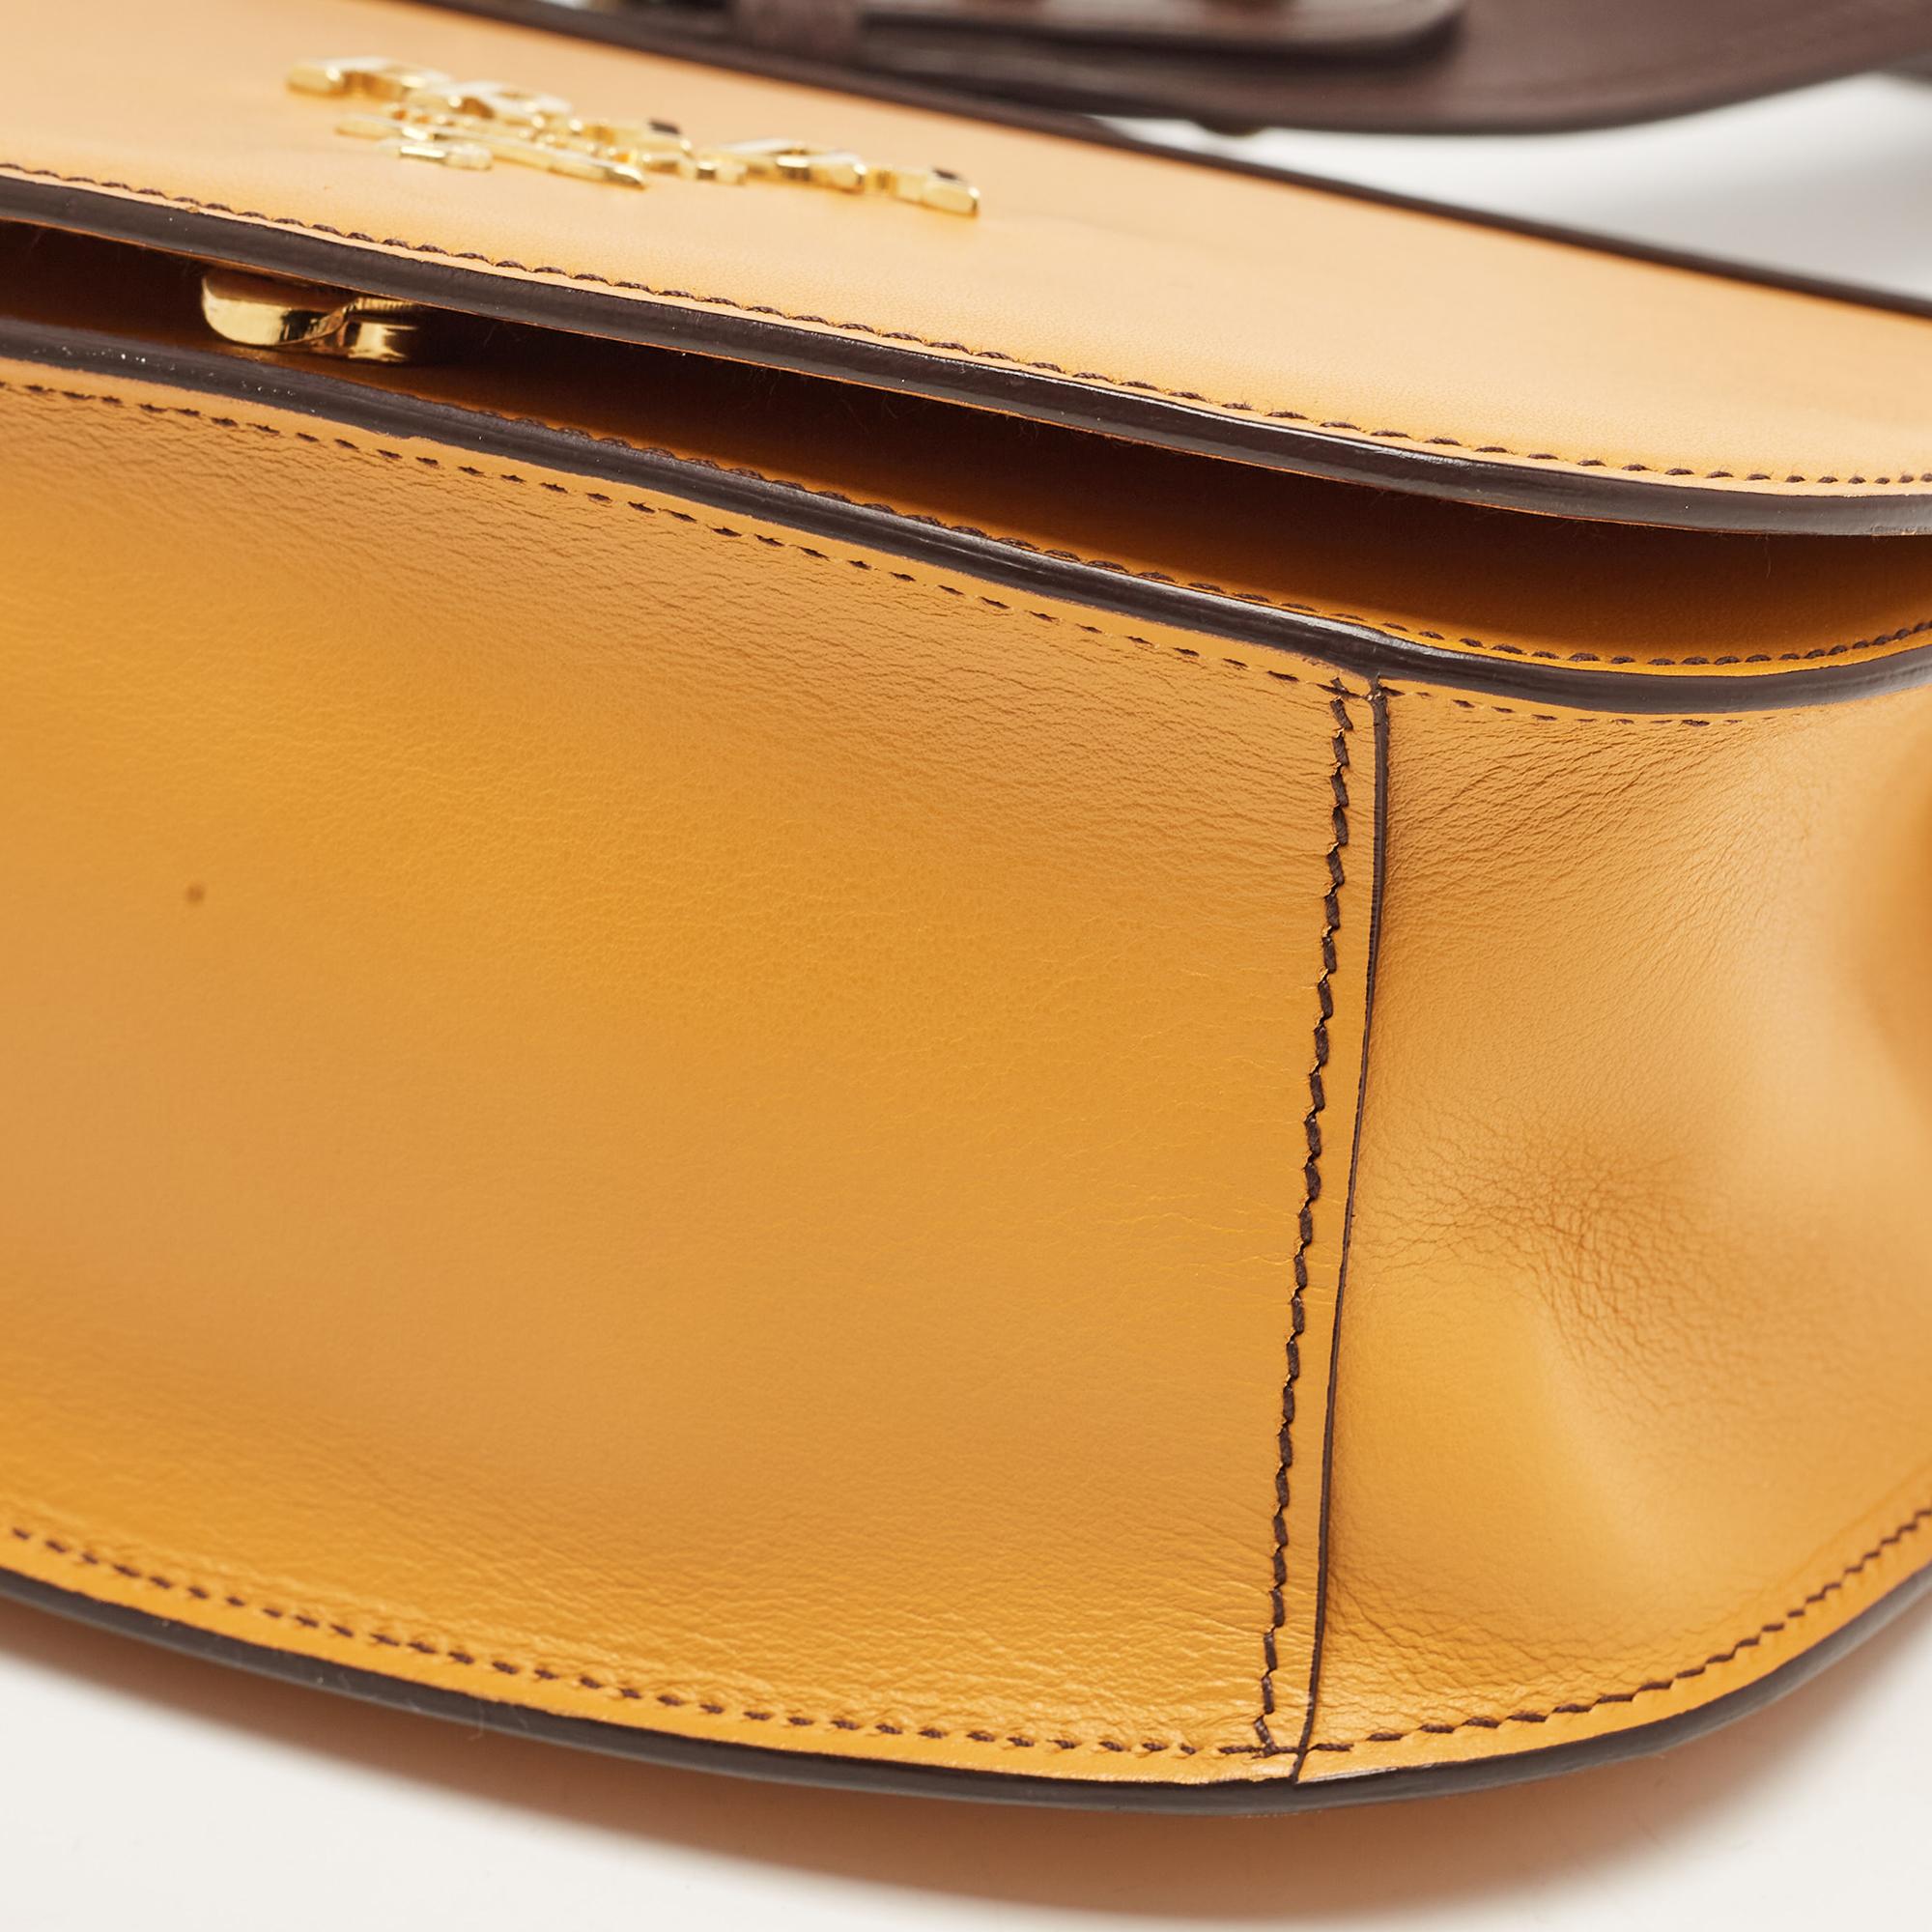 Prada Mustard Yellow/Choco Brown Leather Pionniere Saddle Bag 8